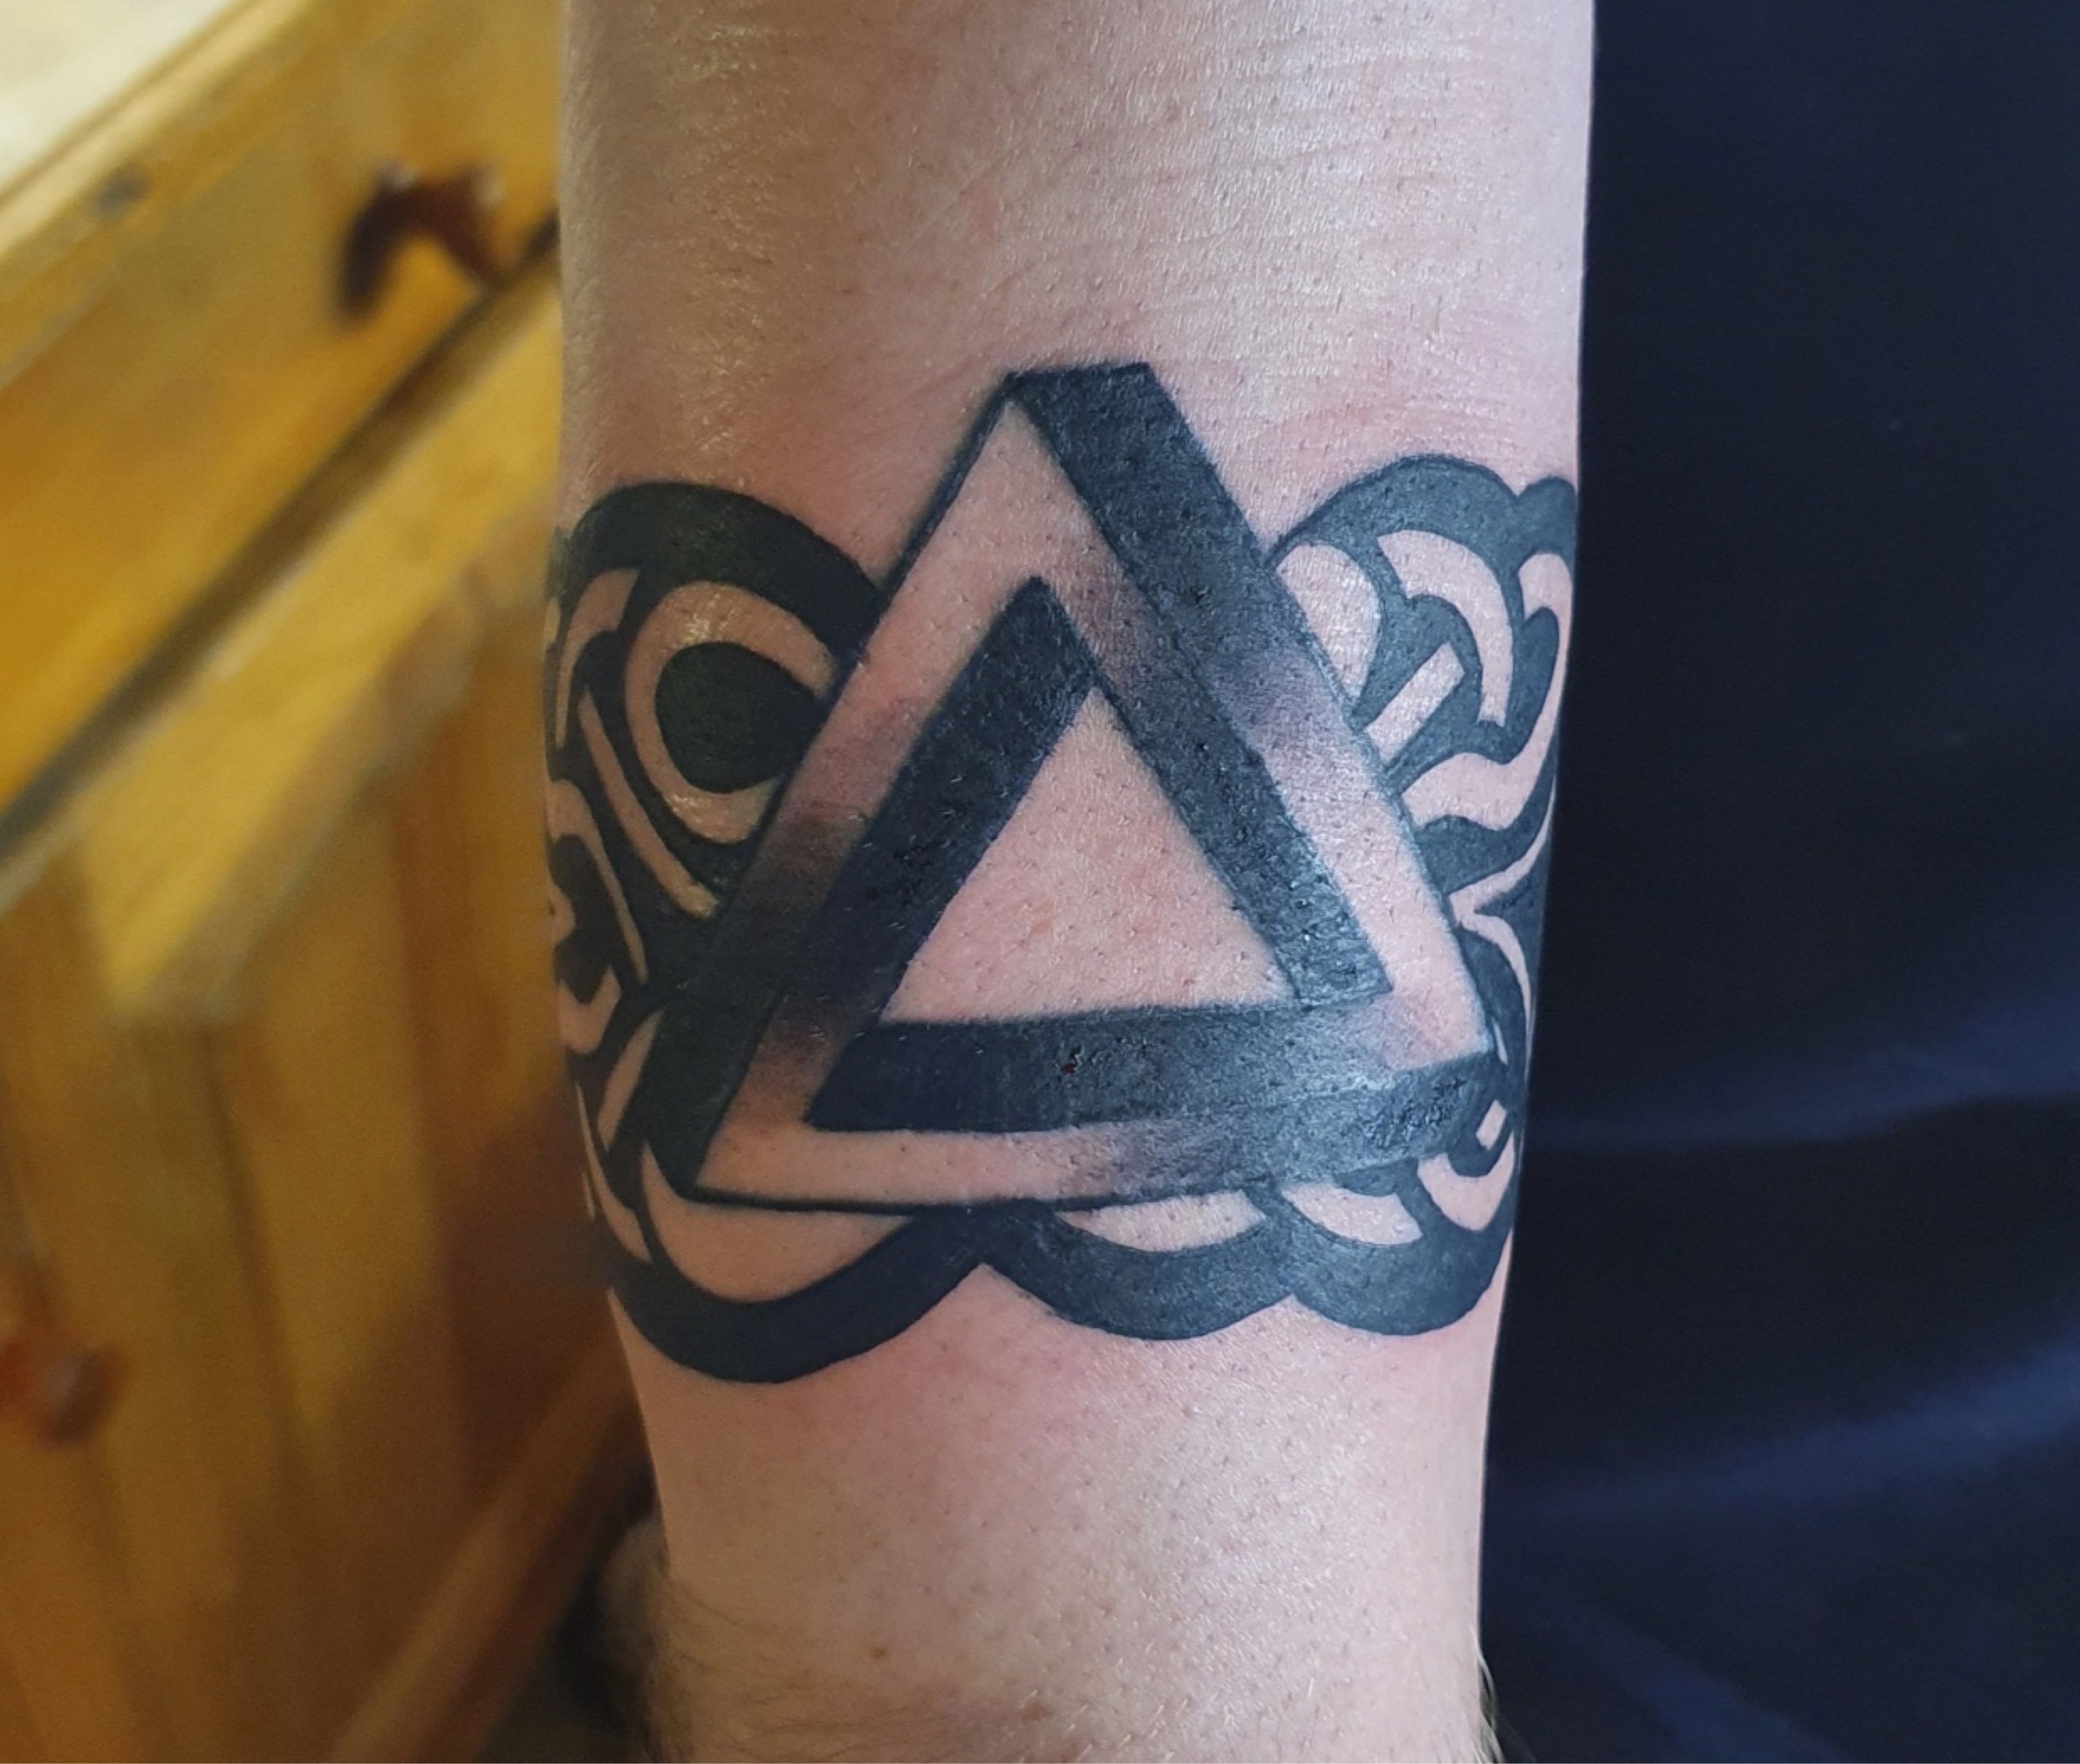 Irish Street Tattoo All seeing eye. Impossible triangle wooden version. |  IRISH ST TATTOO